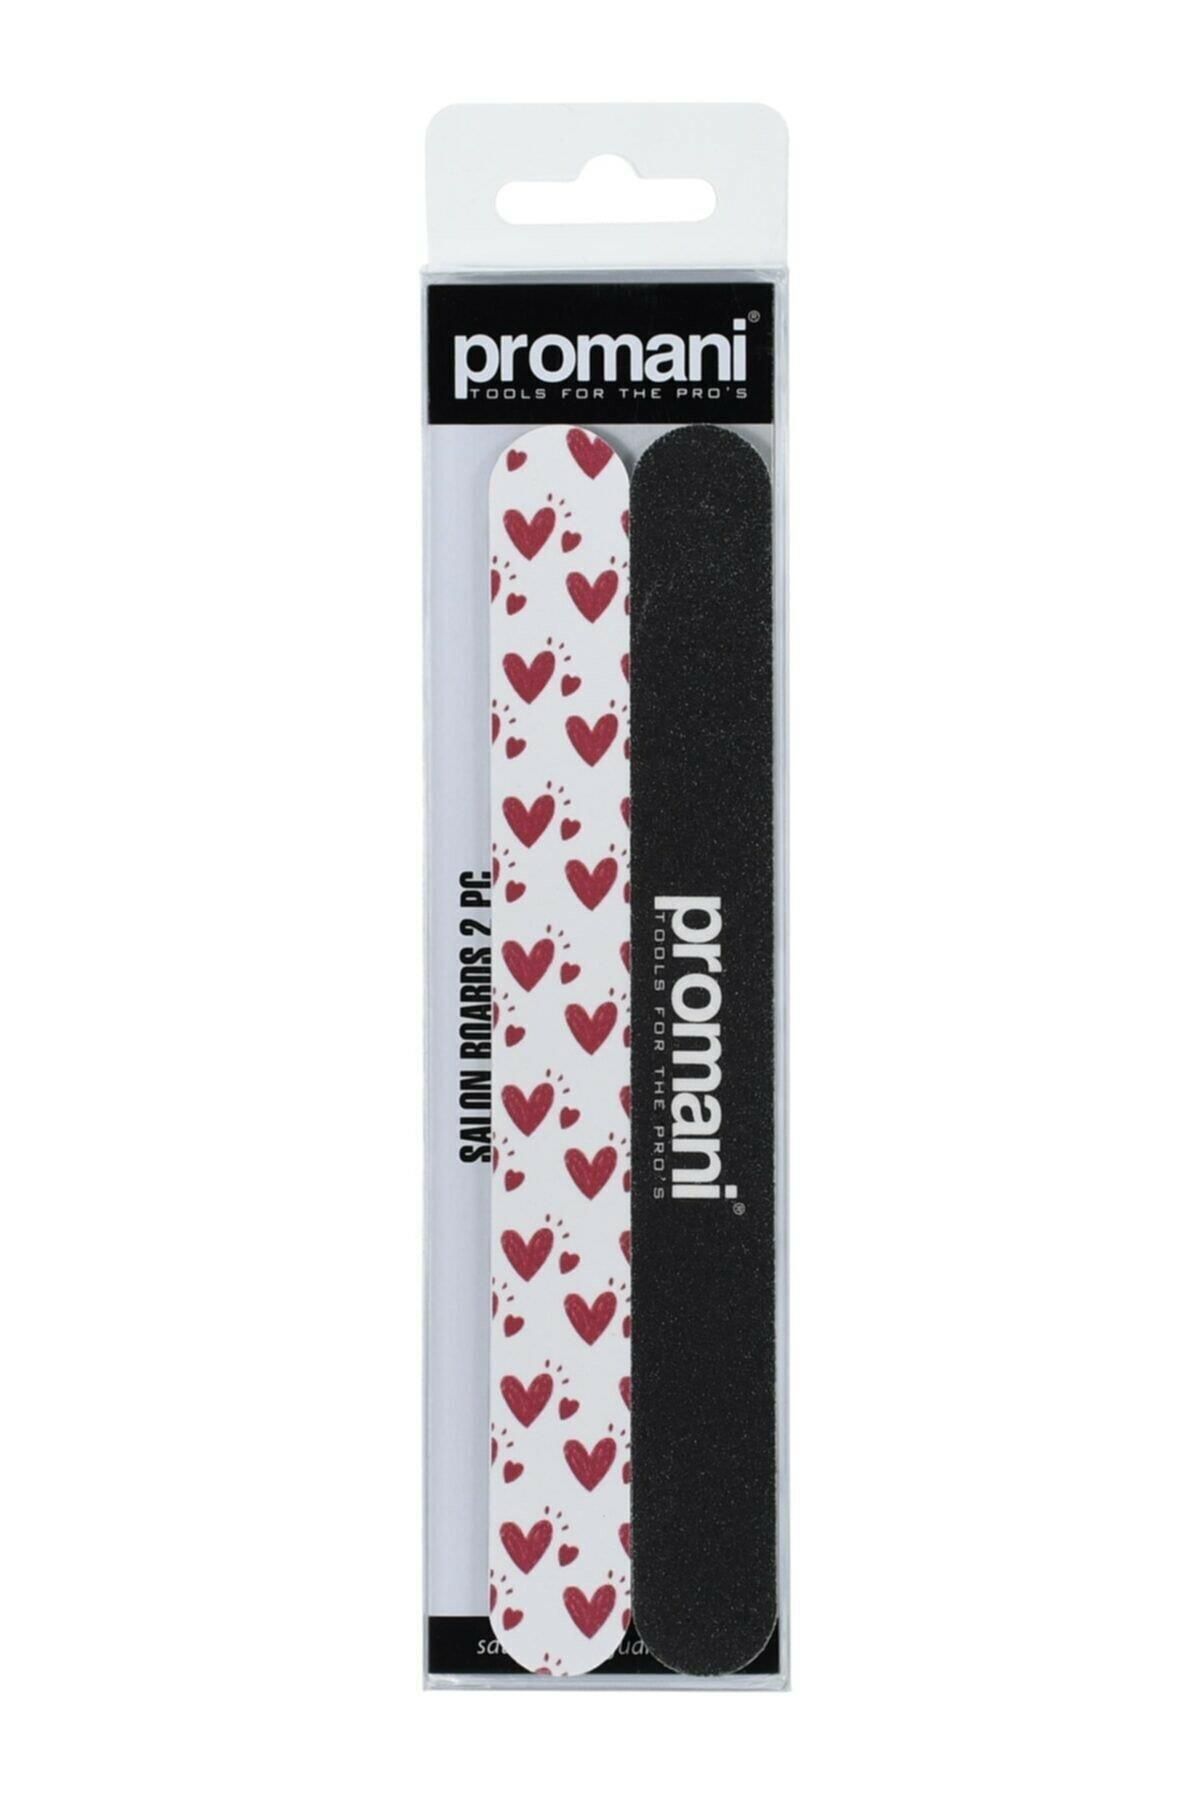 Promani 2'li Kağıt Törpü (SİYAH VE DESENLİ) - Pr404 10598